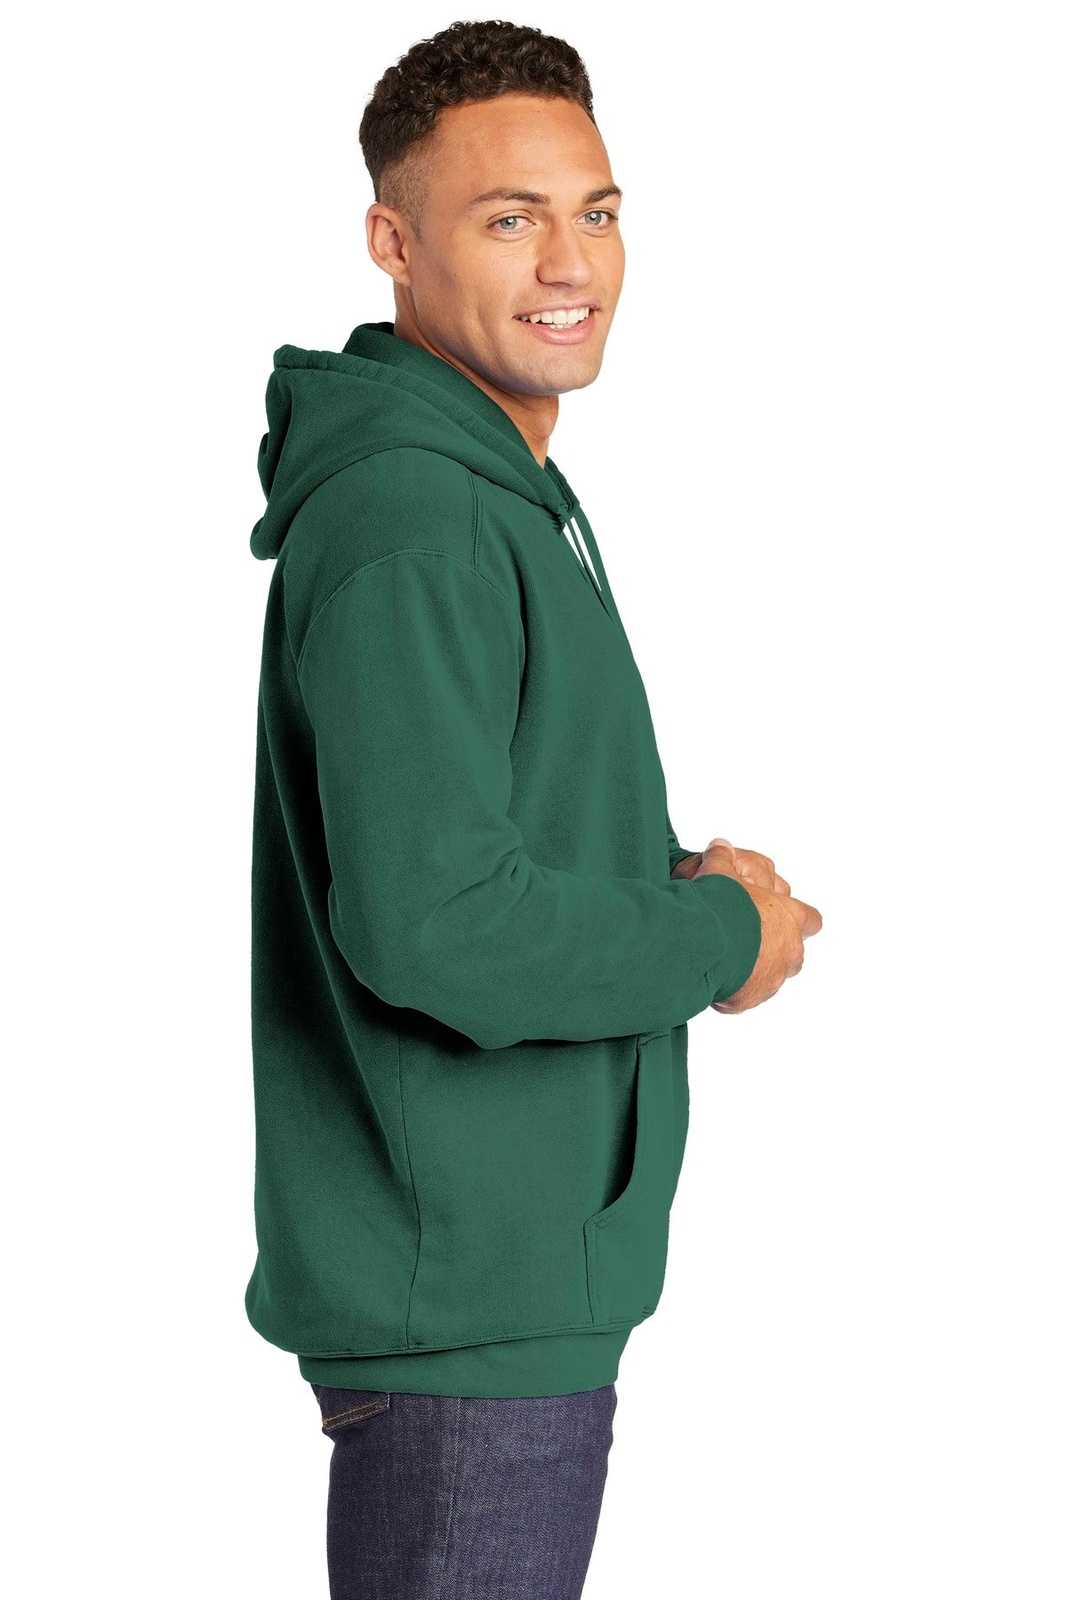 Comfort Colors 1567 Ring Spun Hooded Sweatshirt - Light Green - HIT a Double